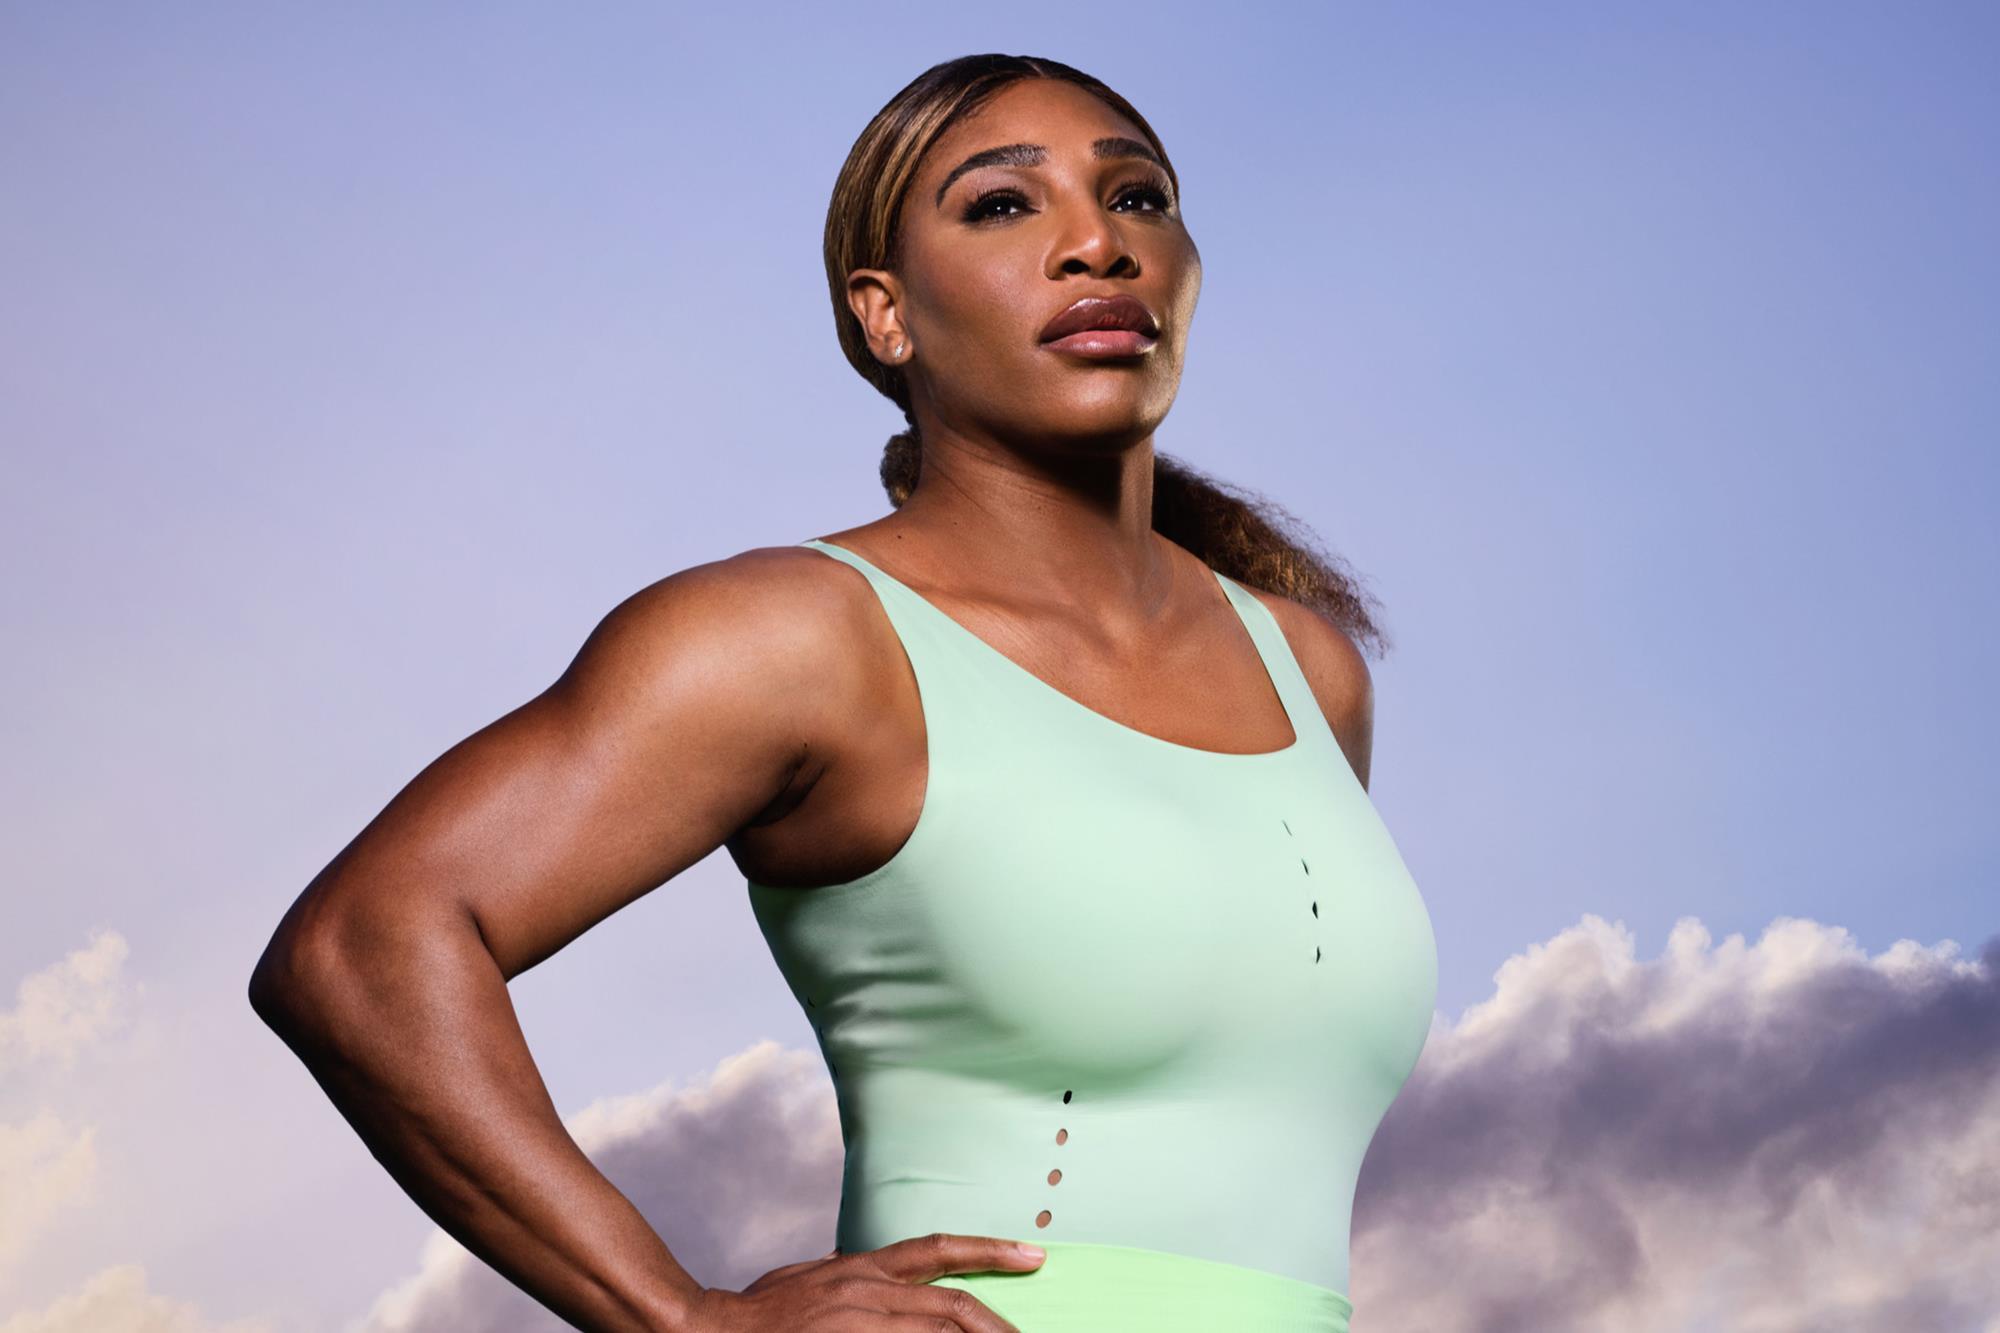 Serena Williams CFDA Award: Serena Williams becomes the first